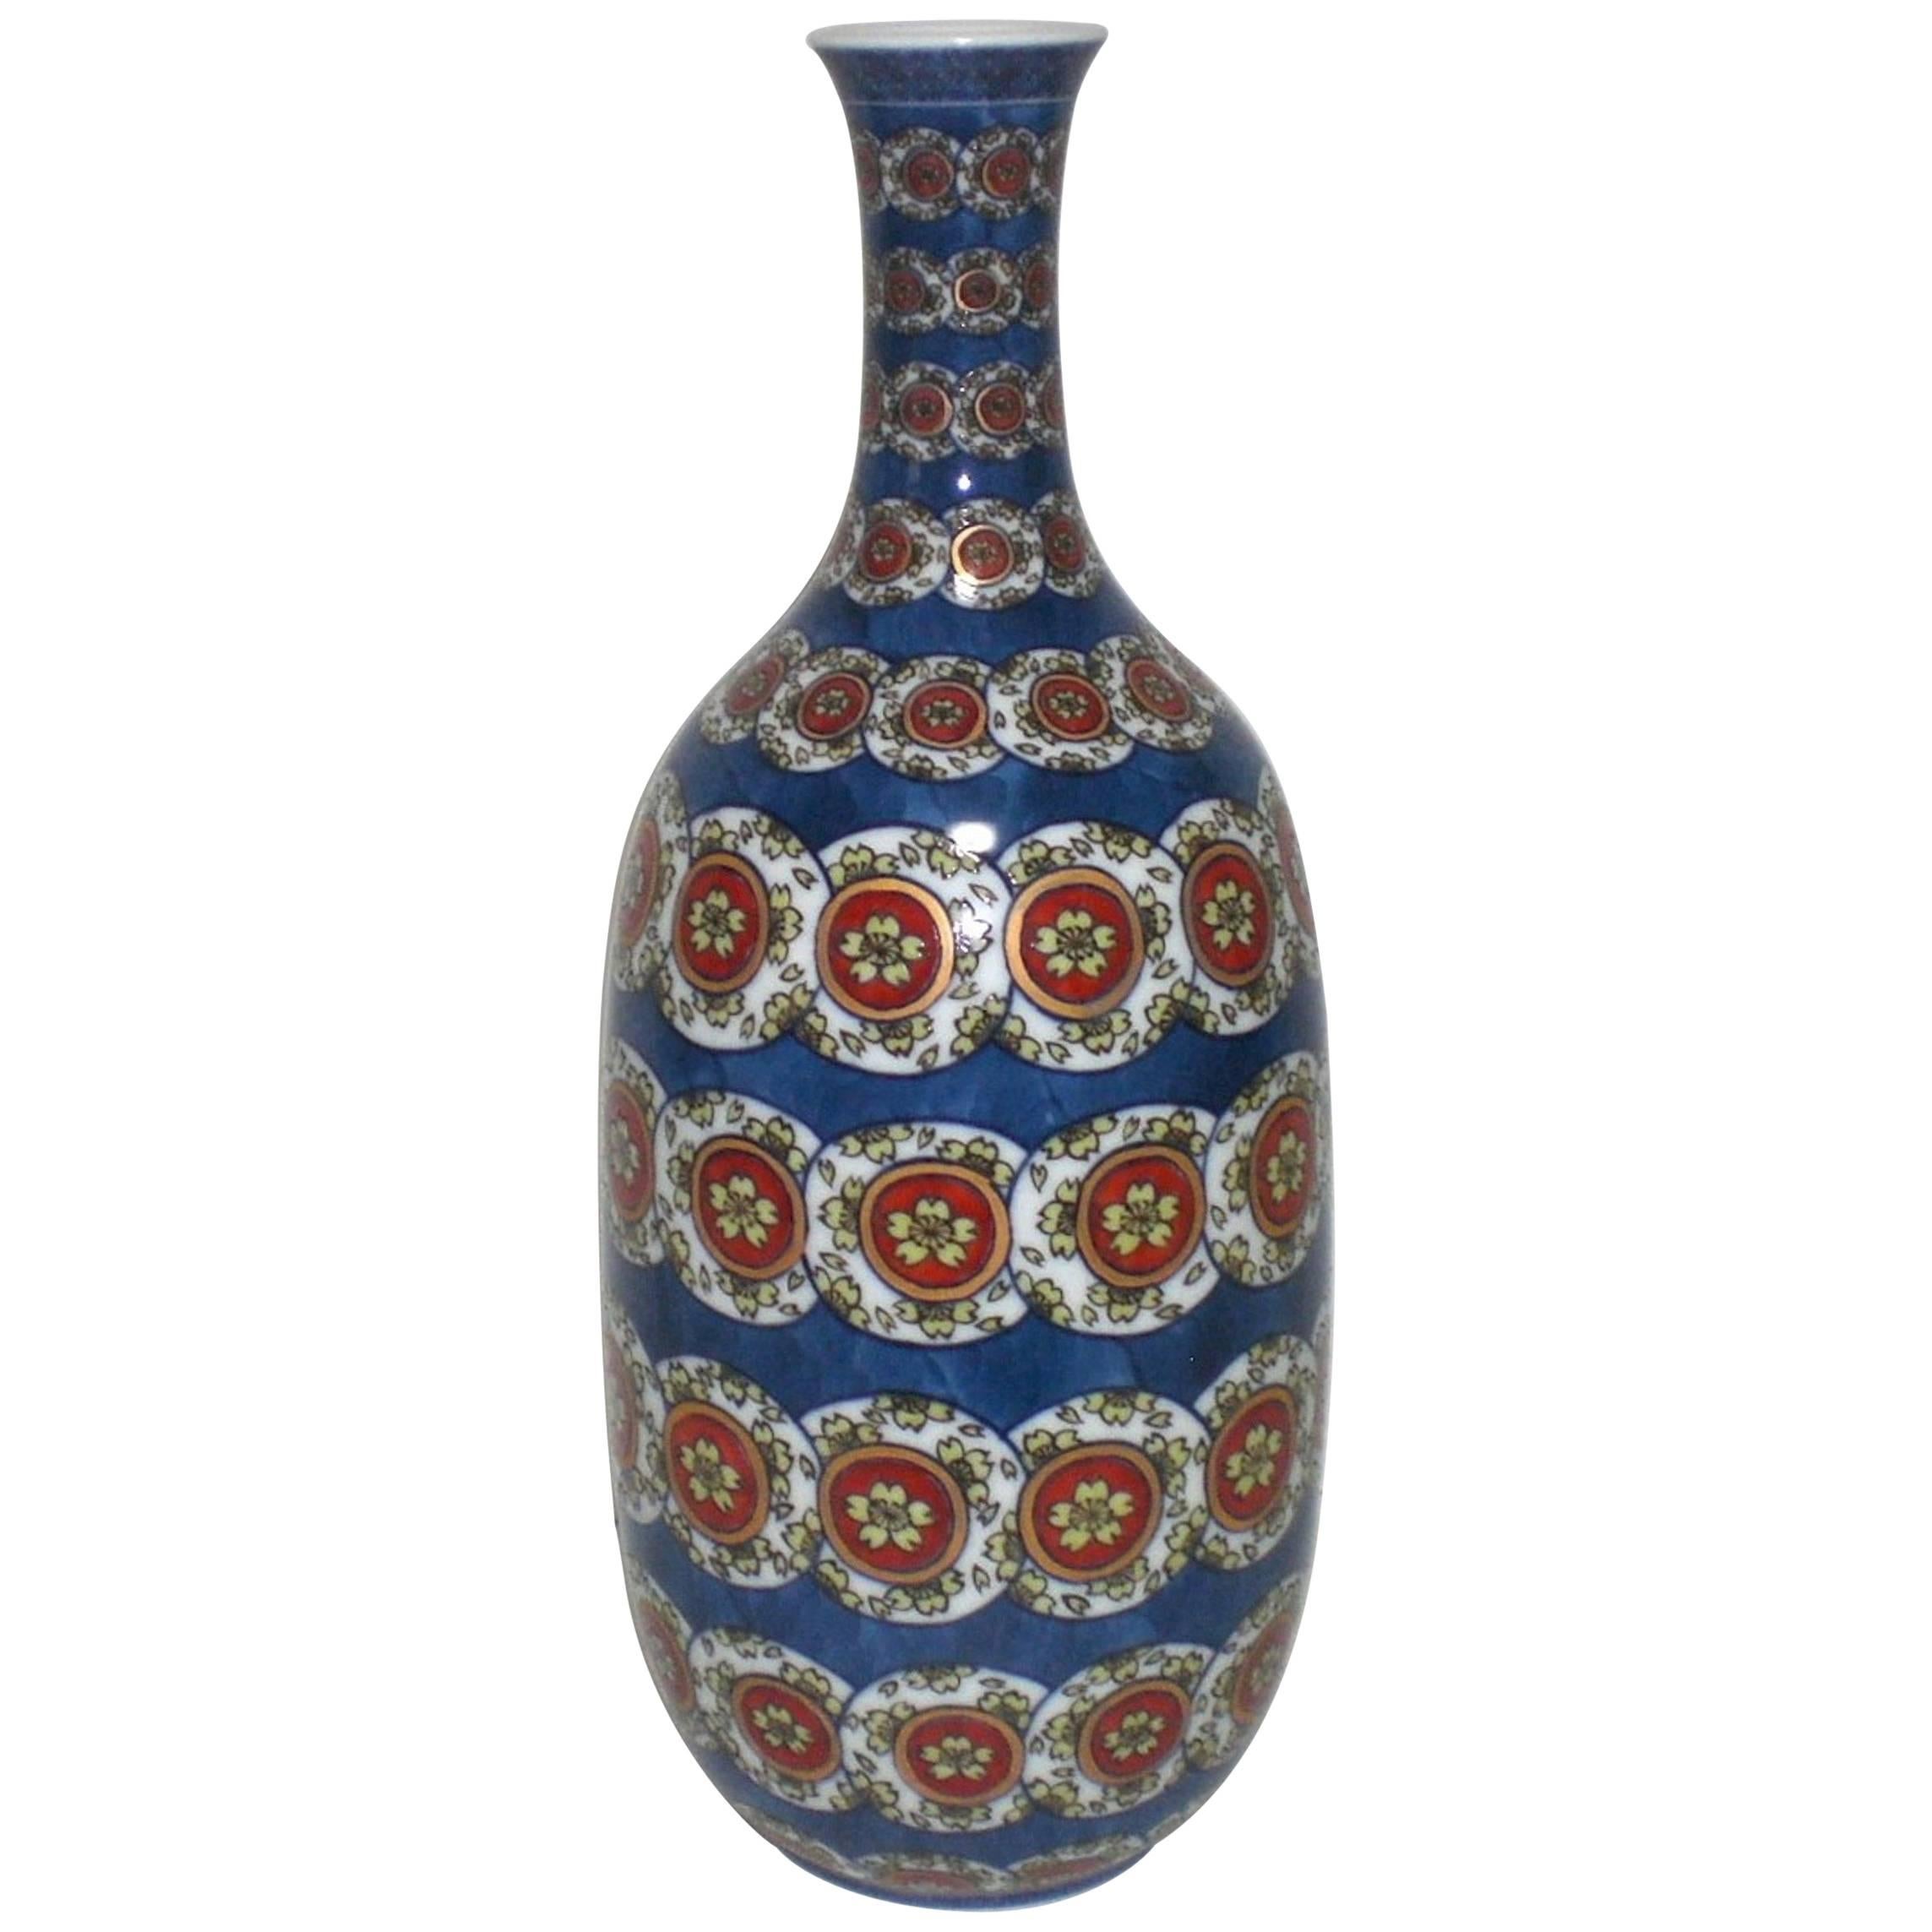 Japanese Contemporary Porcelain Vase Blue White Red by Master Artist